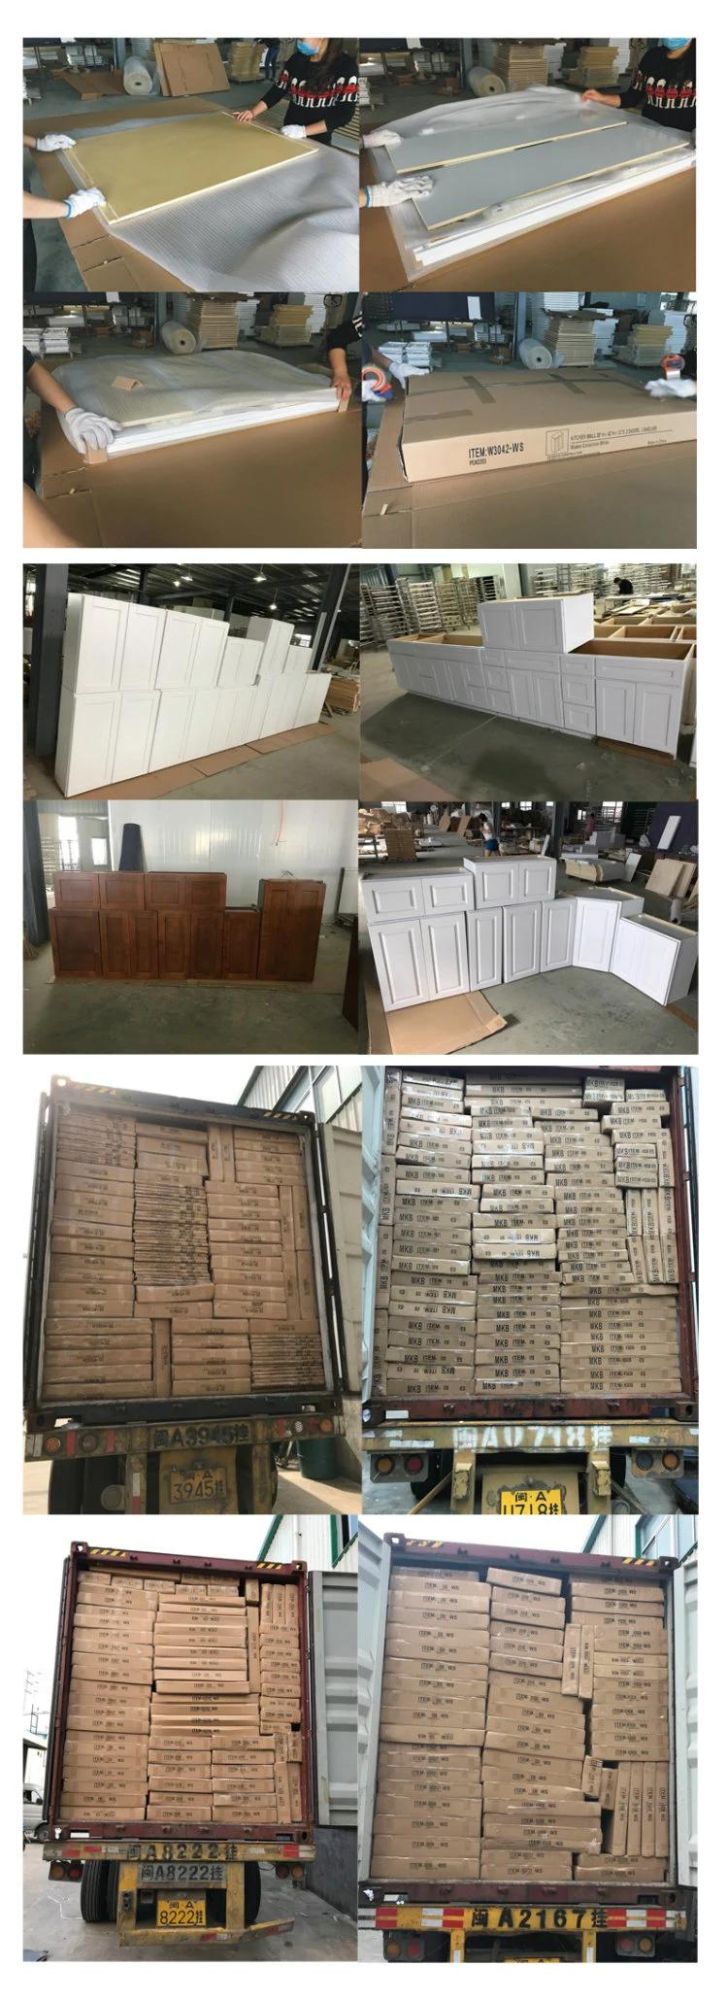 MDF PVC Solid Wood Bathroom Furniture Vanity Cabinet Set